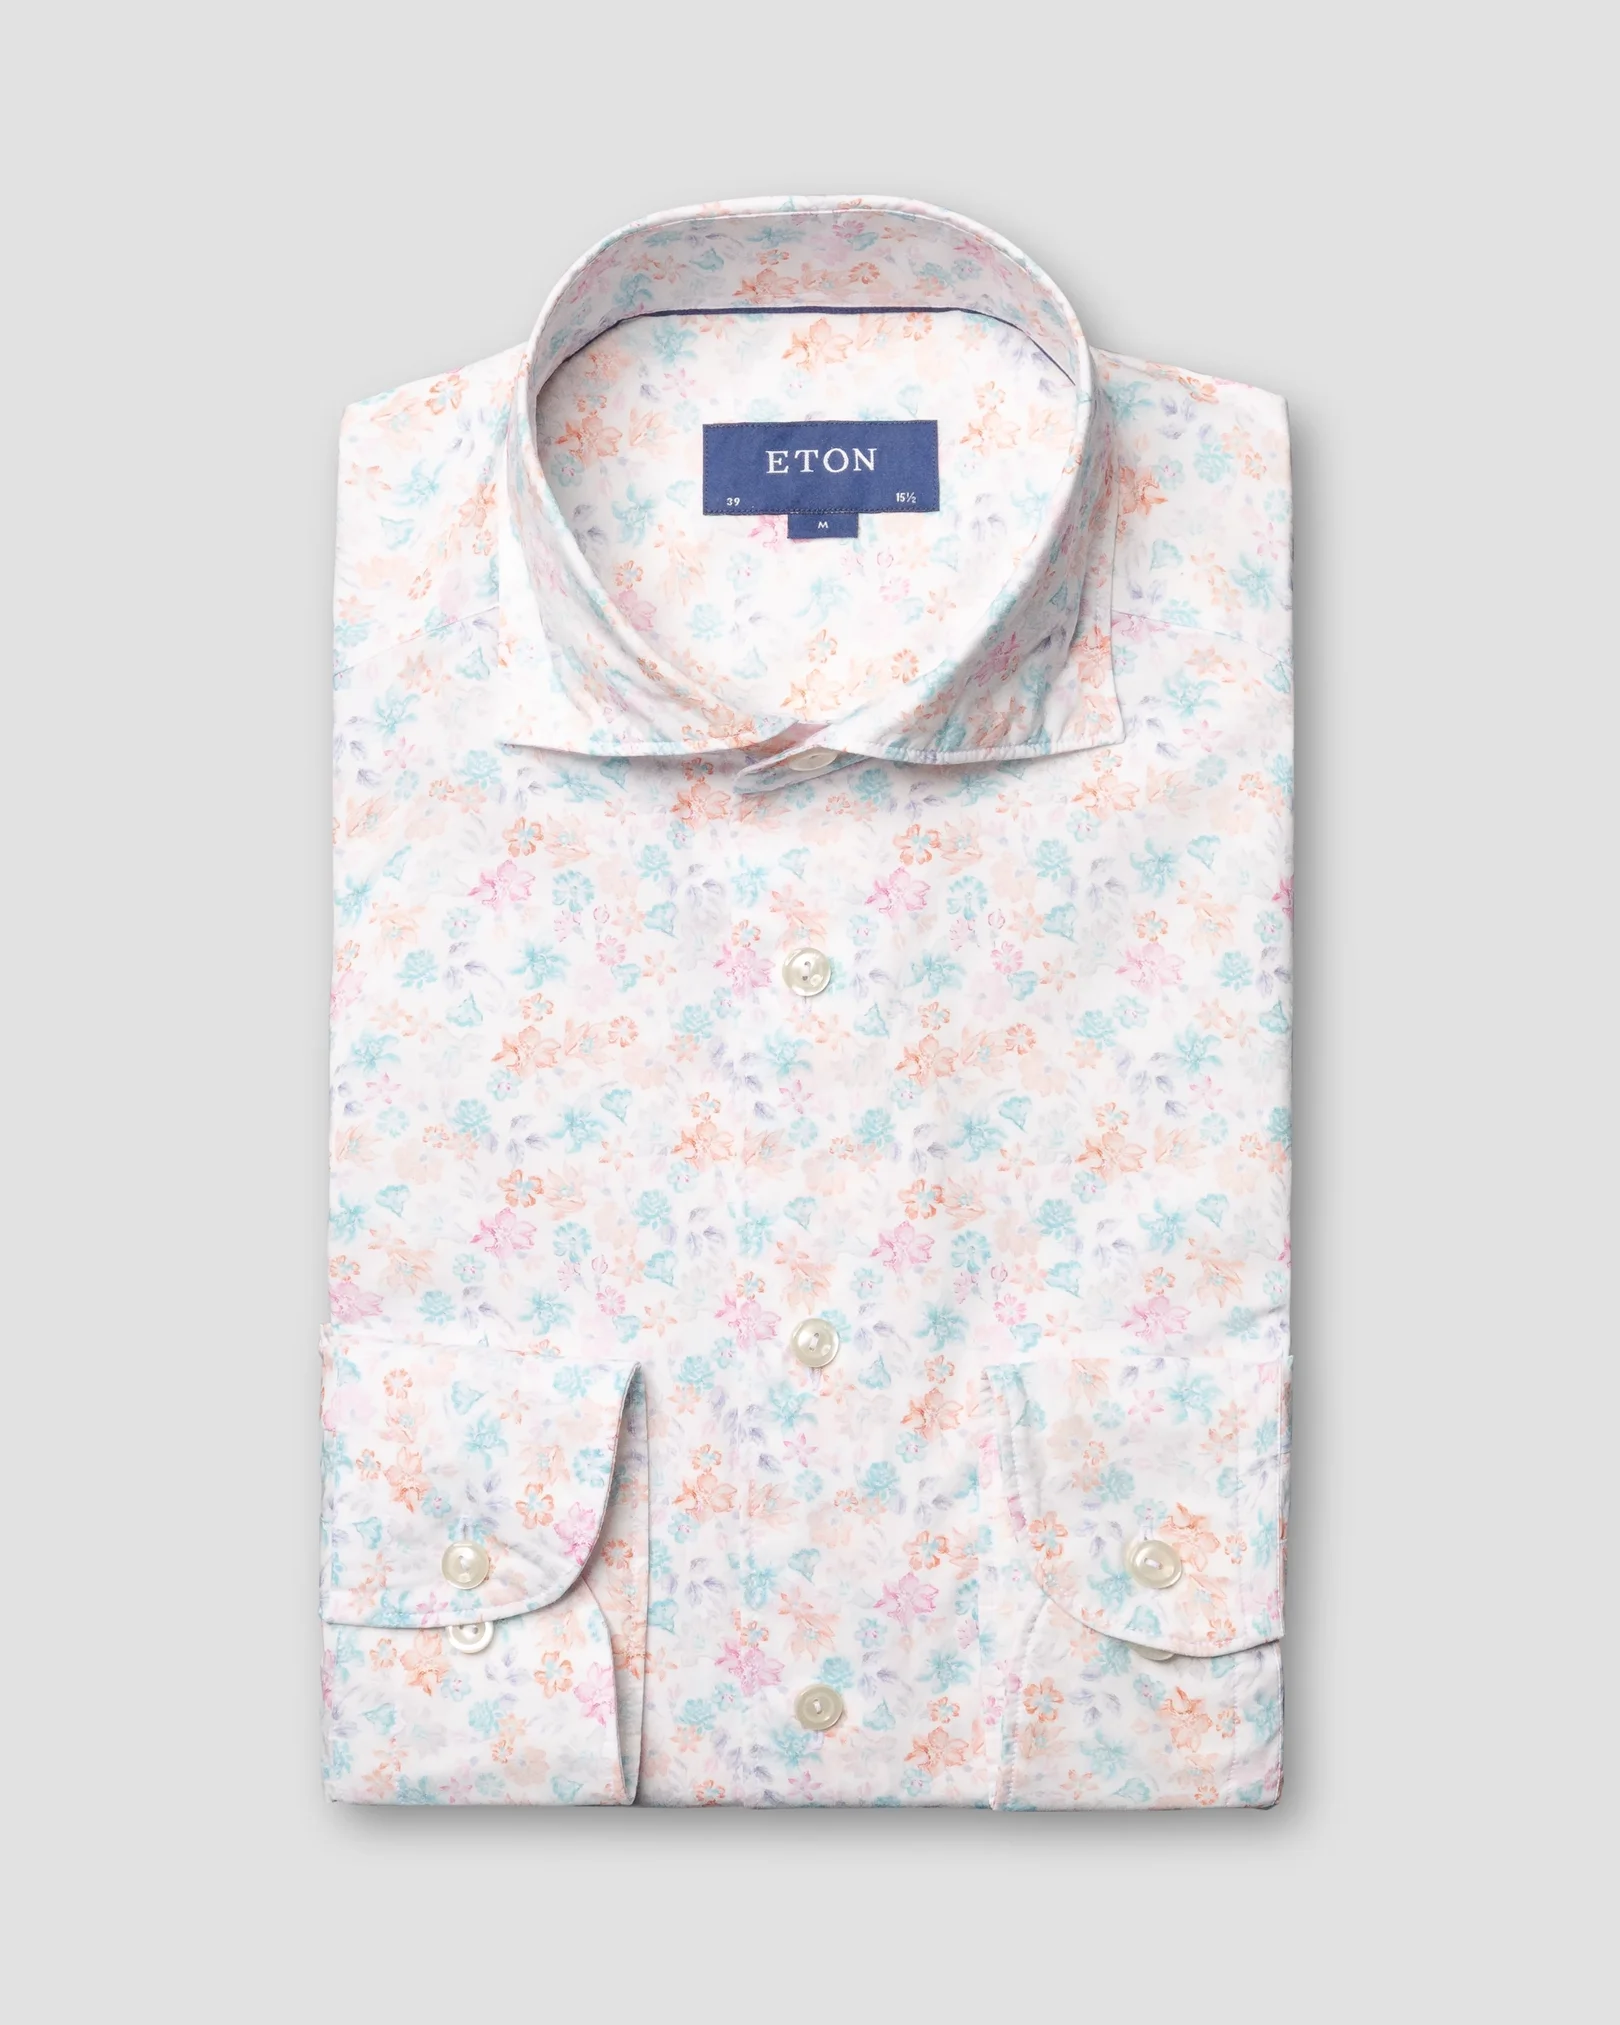 Eton - pink flourishing shirt soft